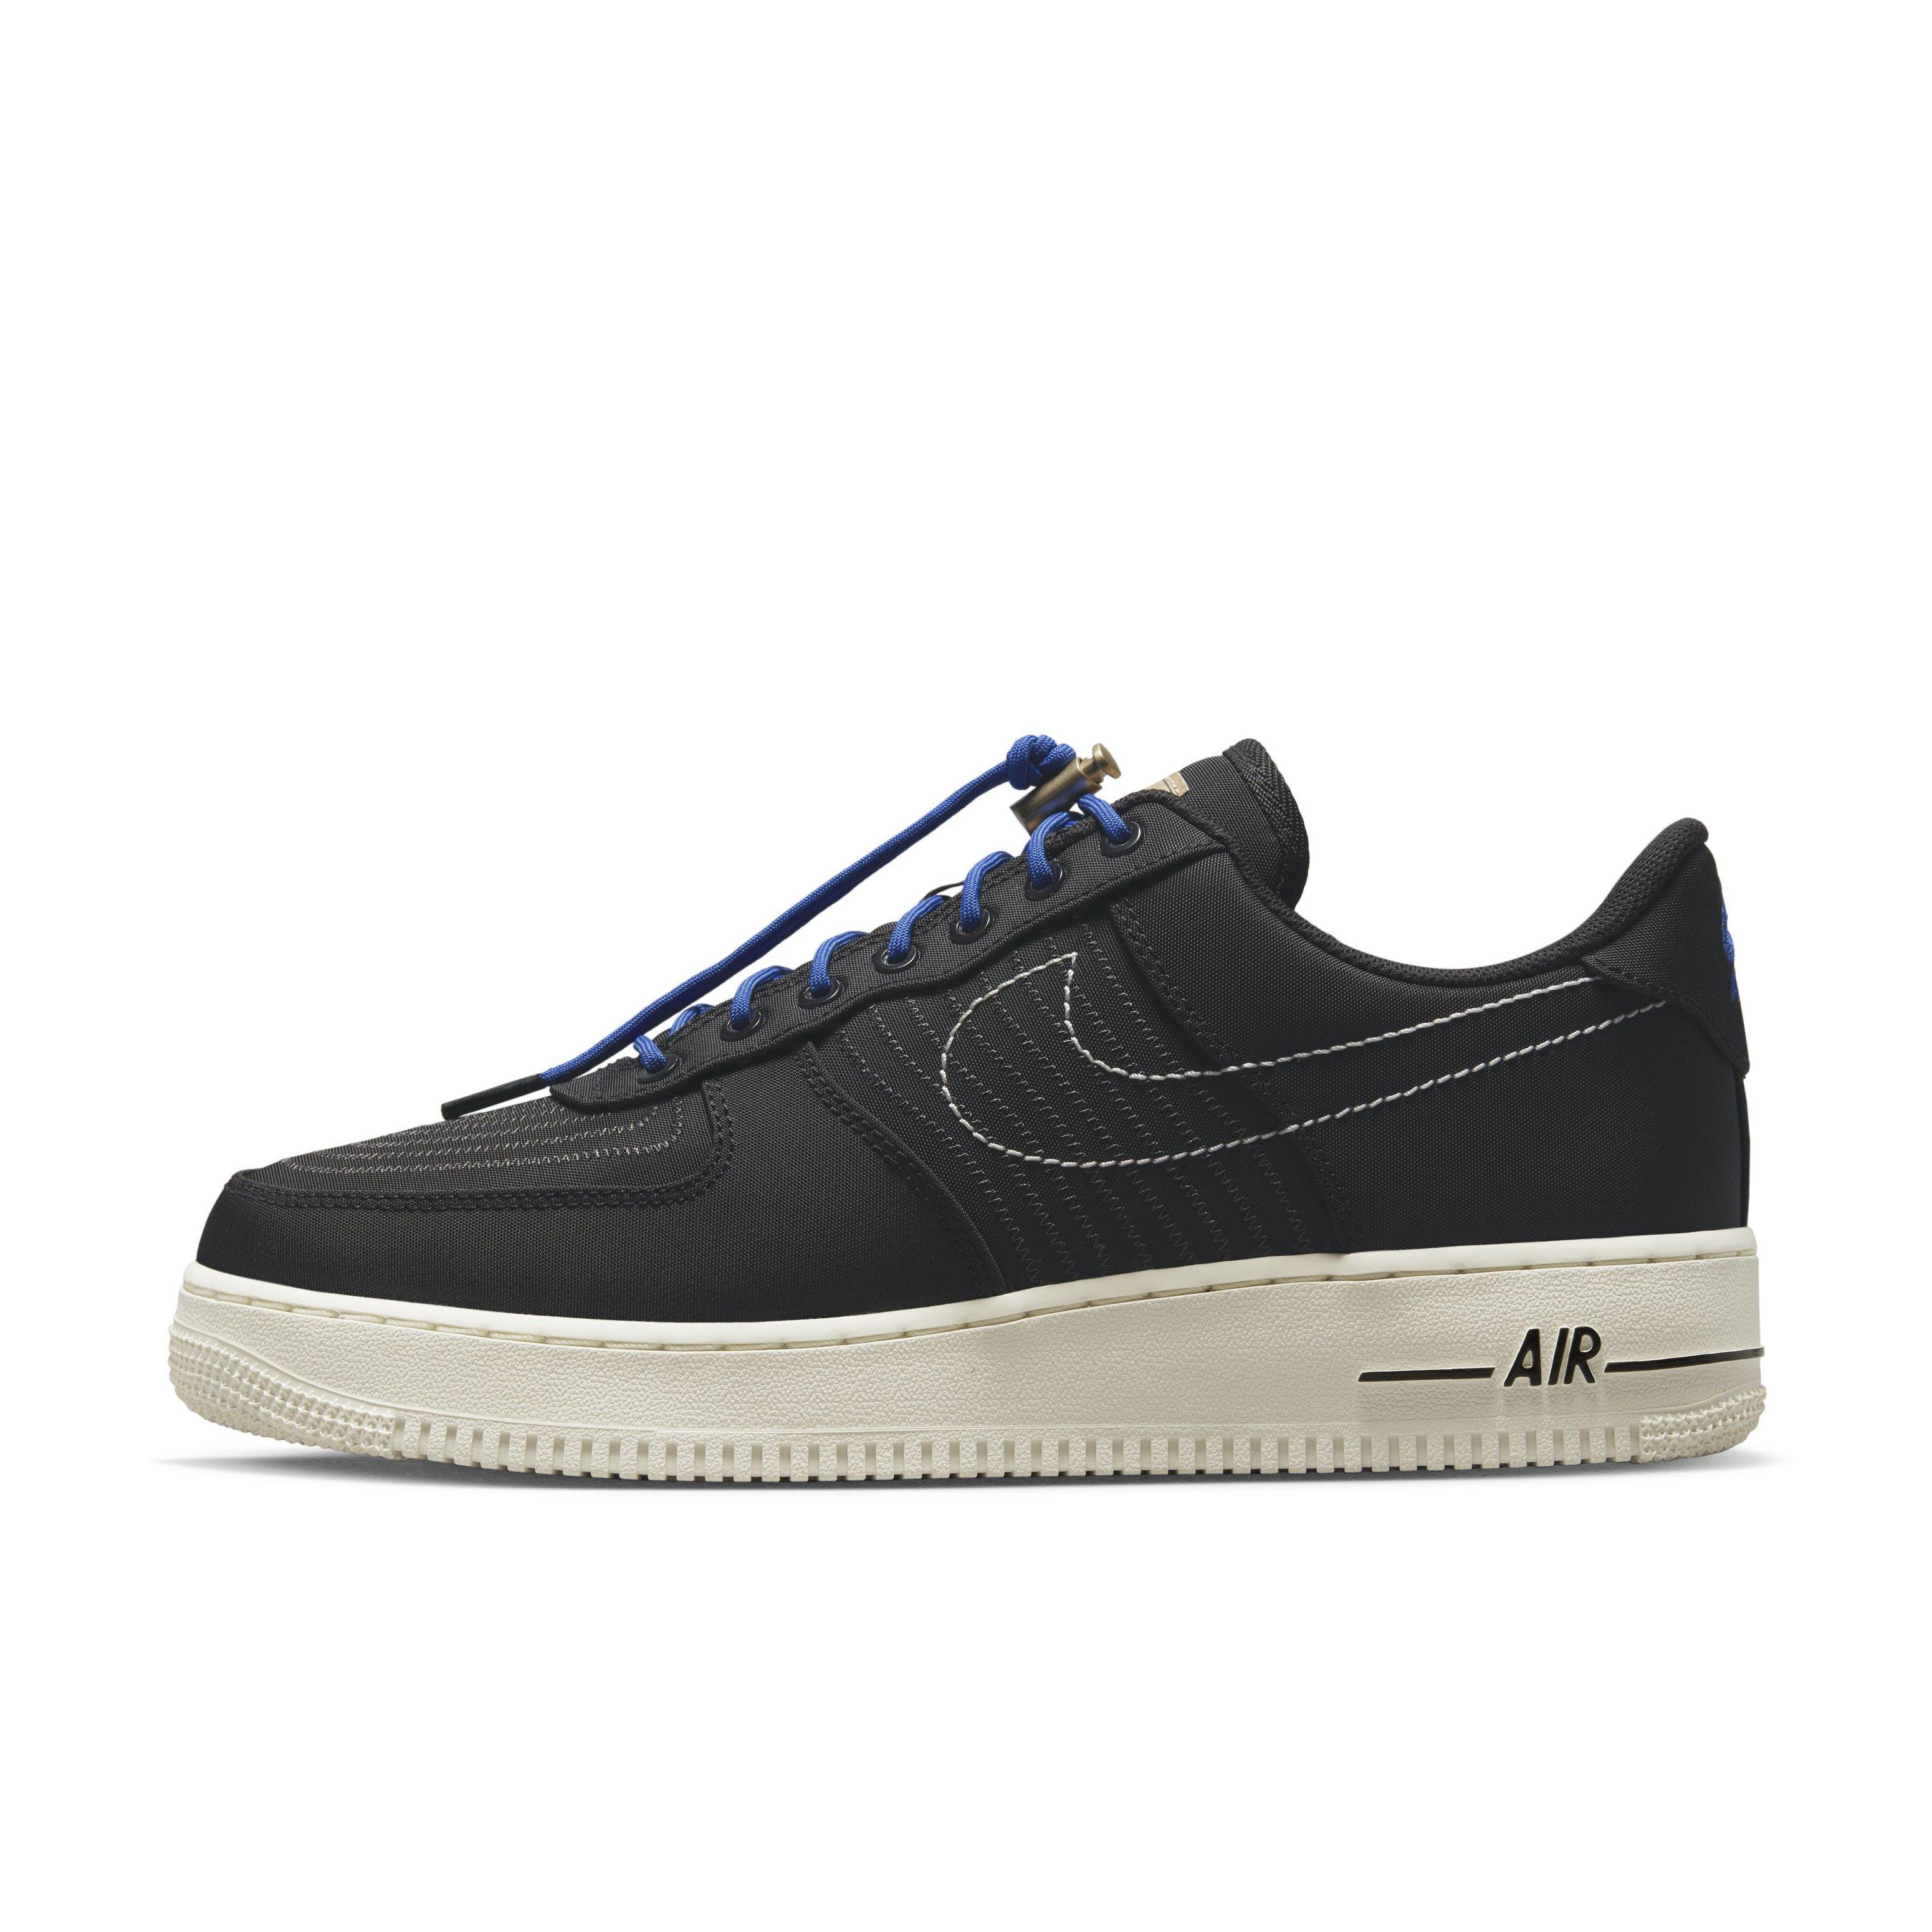 Nike Air Force 1 '07 LV8 Black/Sail/Black/Anthracite Men's Shoe - Hibbett